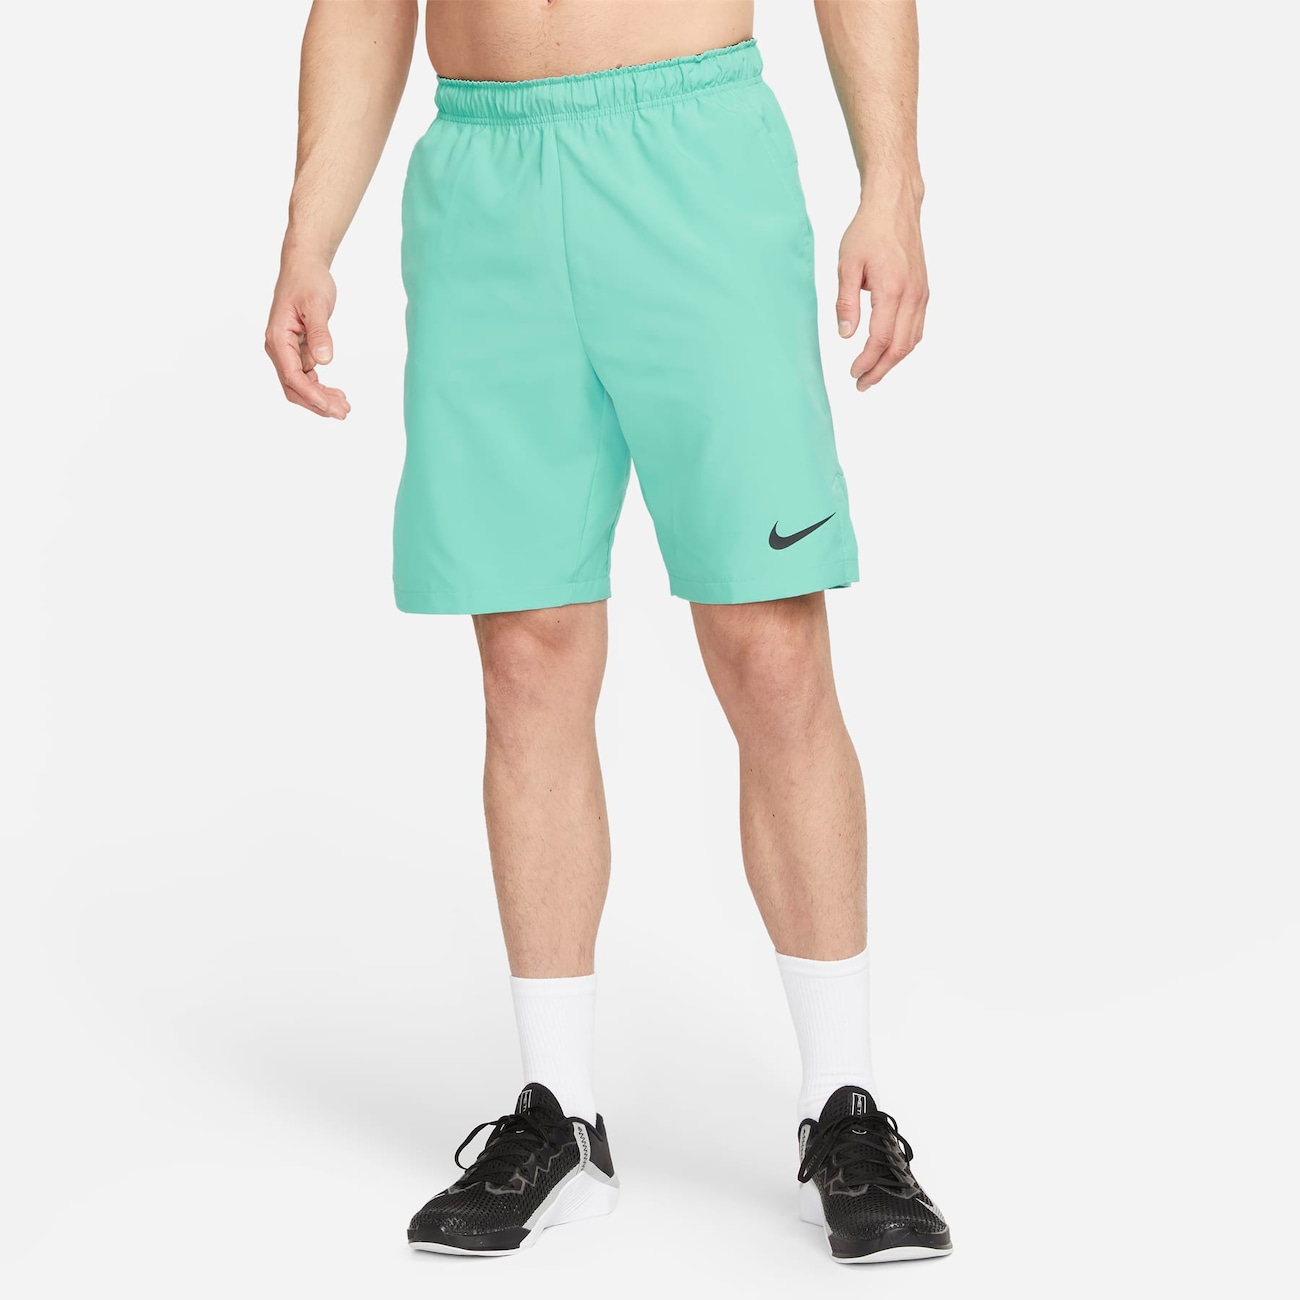 Shorts Nike Flex Masculino - Foto 1